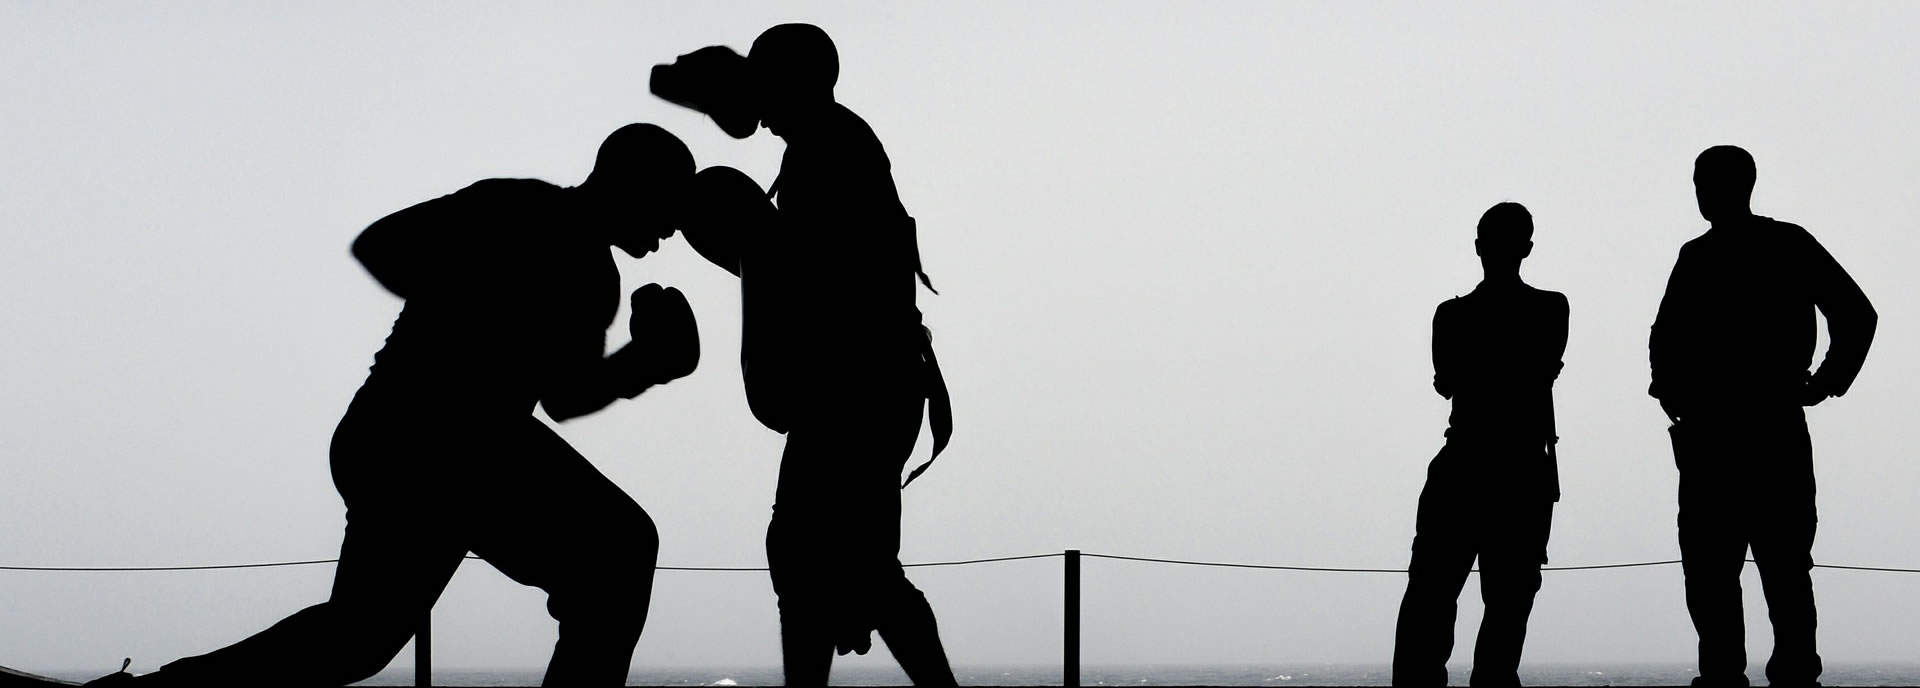 boxing-606193_1920.jpg